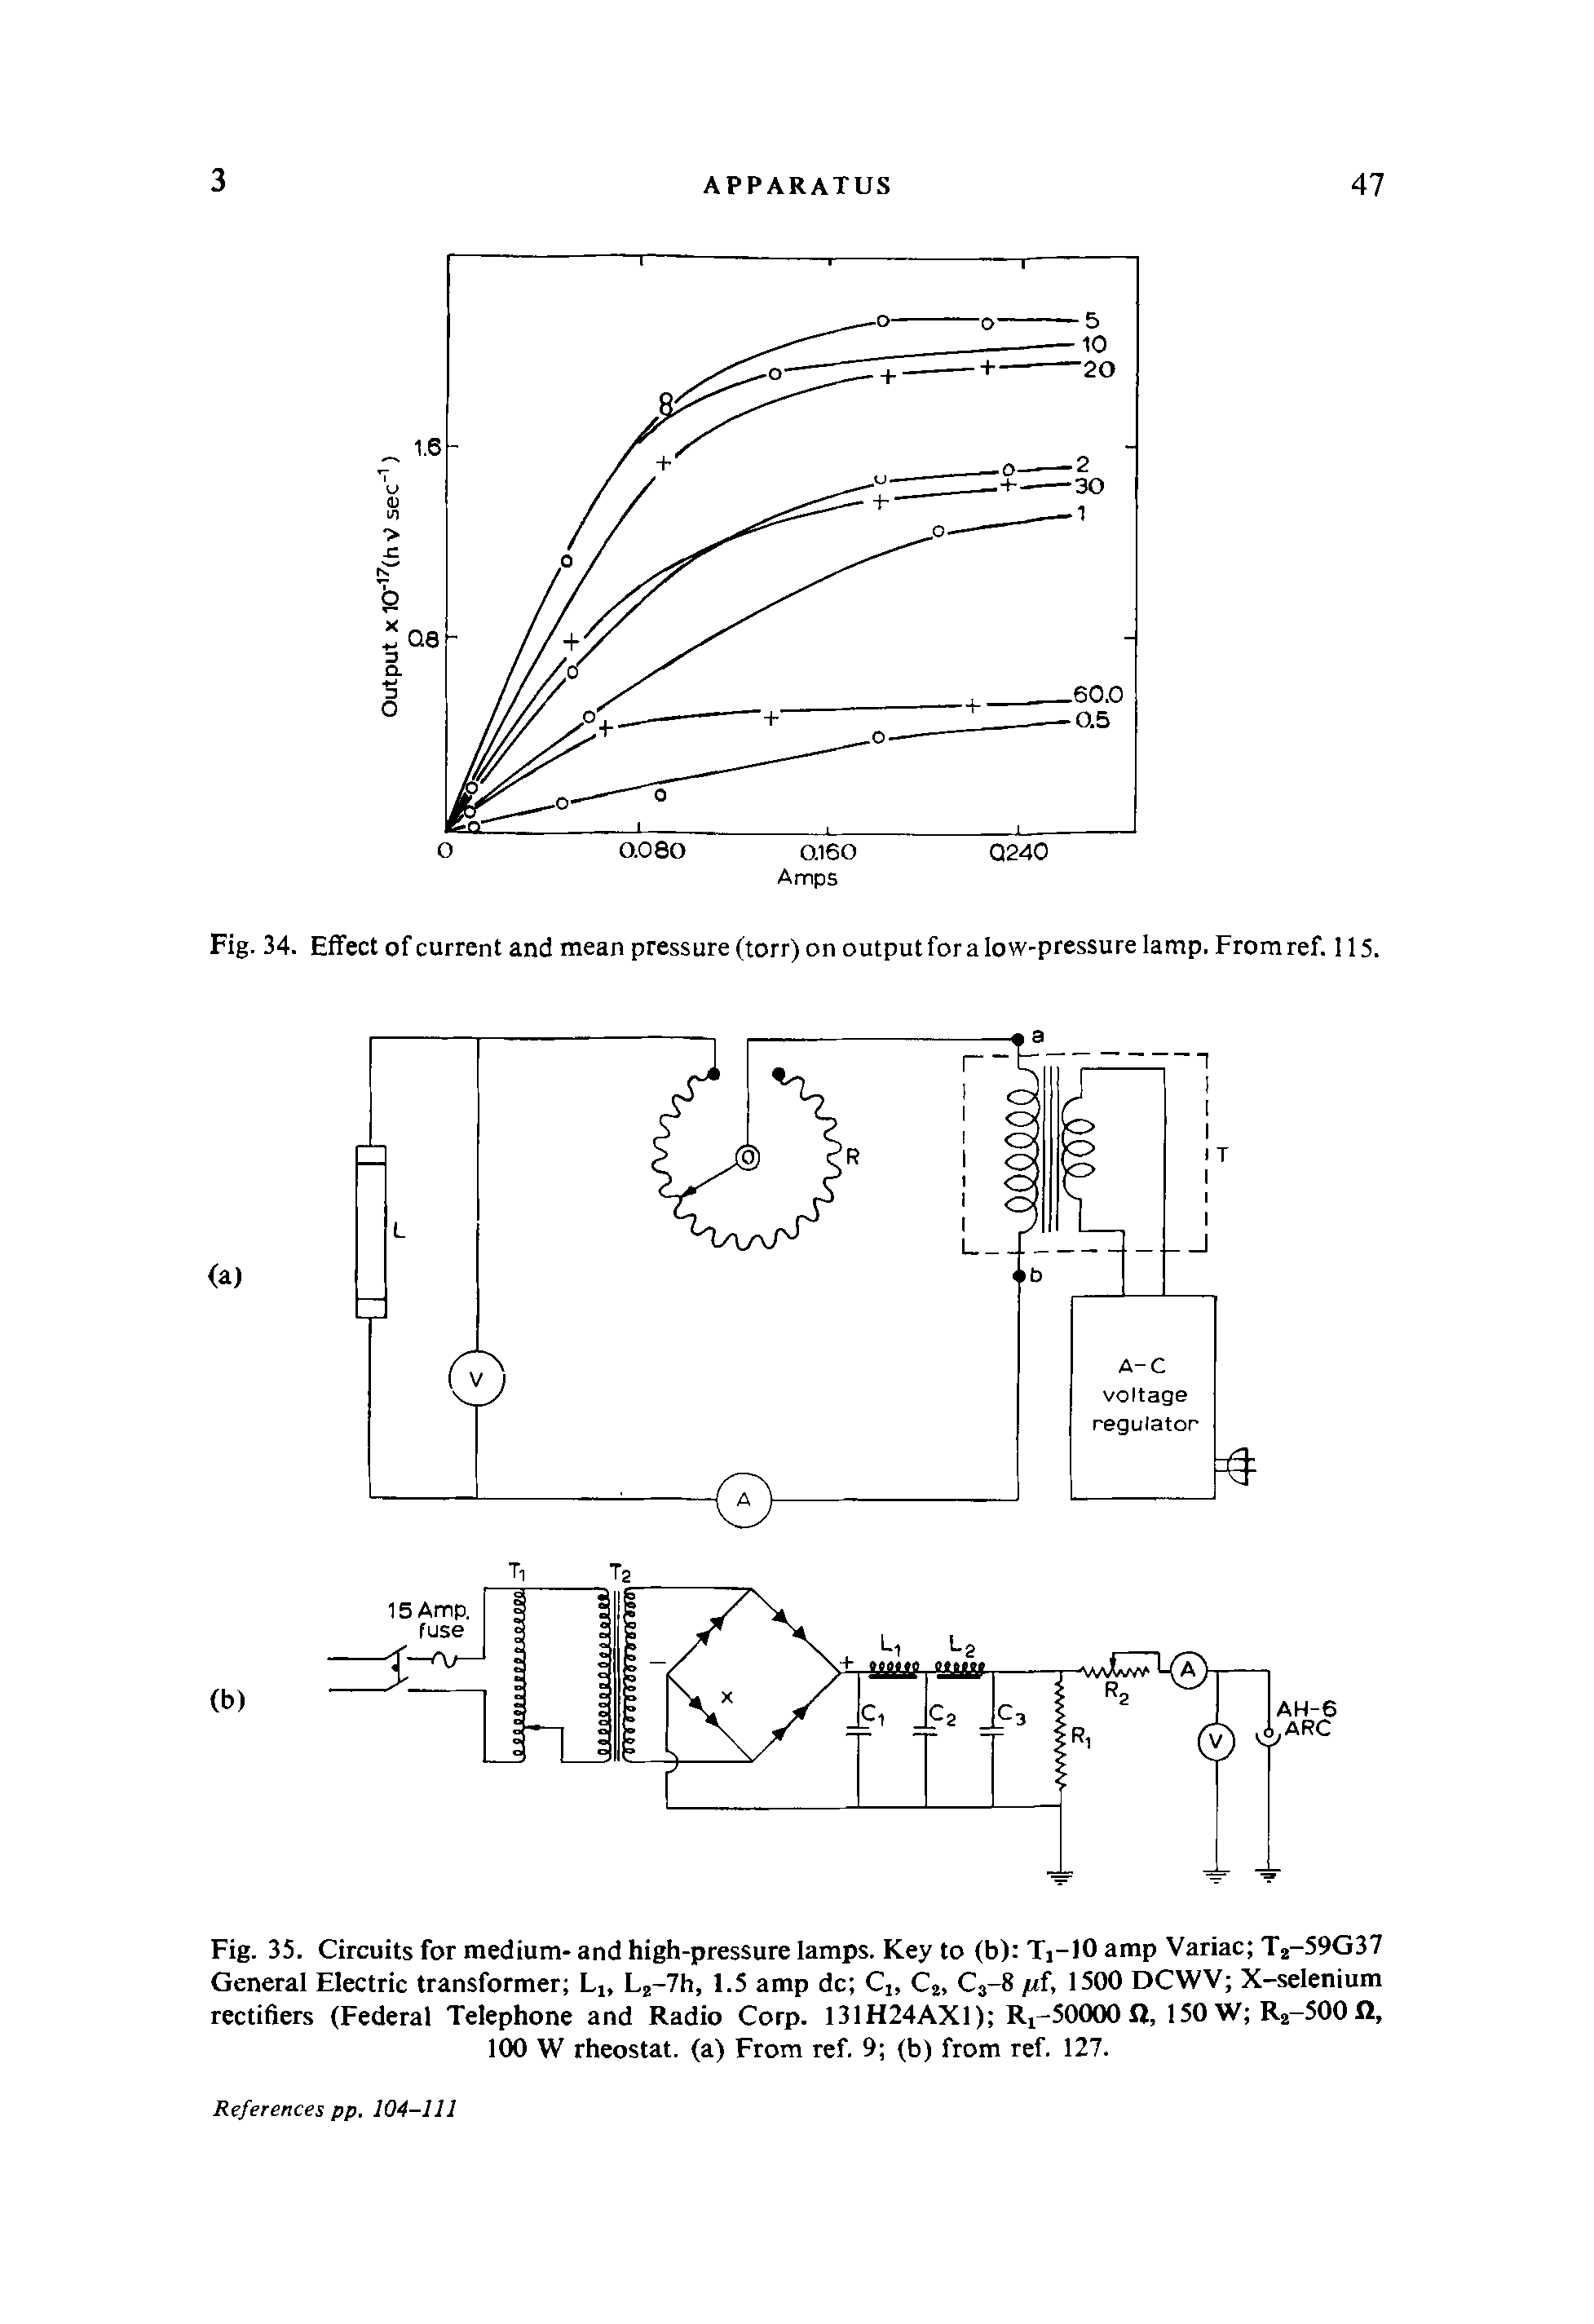 Fig. 35. Circuits for medium- and high-pressure lamps. Key to (b) Tj-10 amp Variac Tj-59G37 General Electric transformer Li, L -Th, 1.5 amp dc Cj, Cj, C3-8 /rf, 1500 DCWV X-selenium rectifiers (Federal Telephone and Radio Corp. 131H24AX1) Ri-50000 ft, 150 W Ra-500 fl, 100 W rheostat, (a) From ref. 9 (b) from ref. 127.